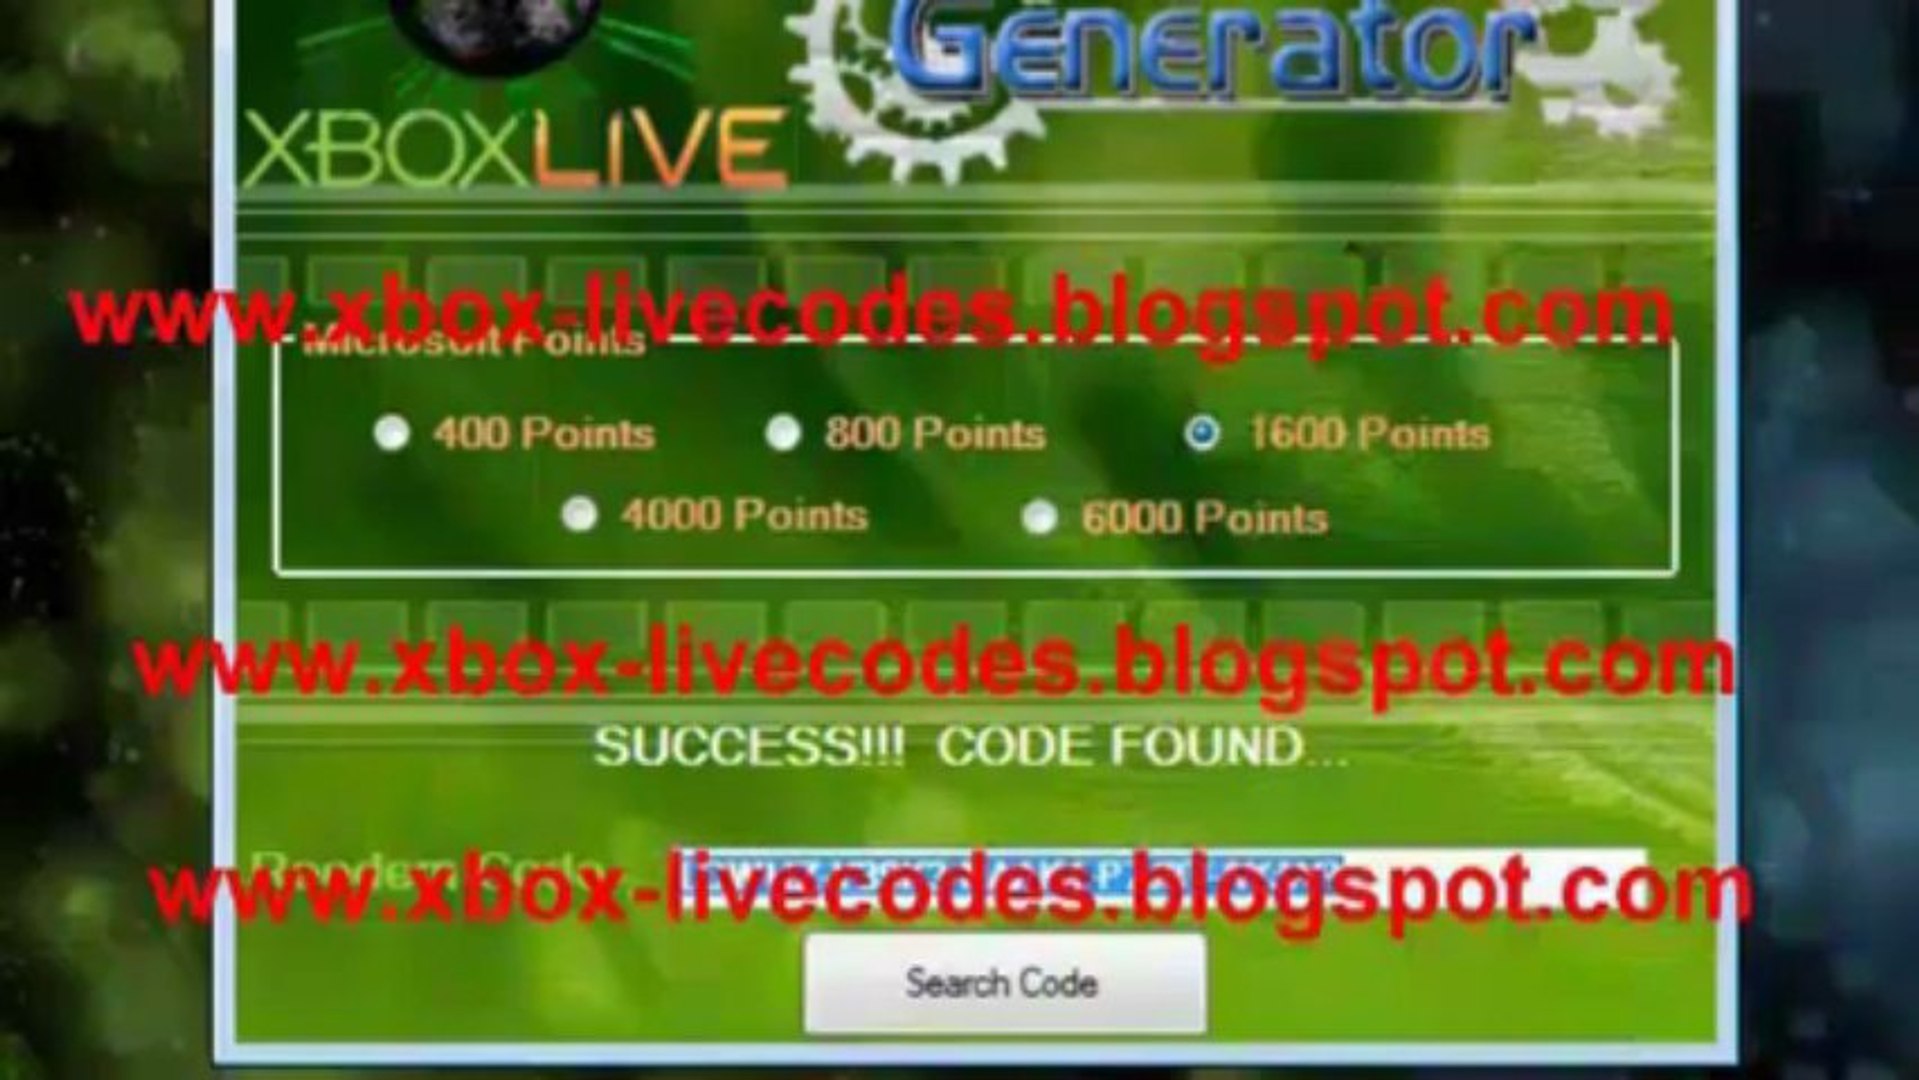 Free Xbox Live Gold Membership Code Generator v3.1 - video Dailymotion